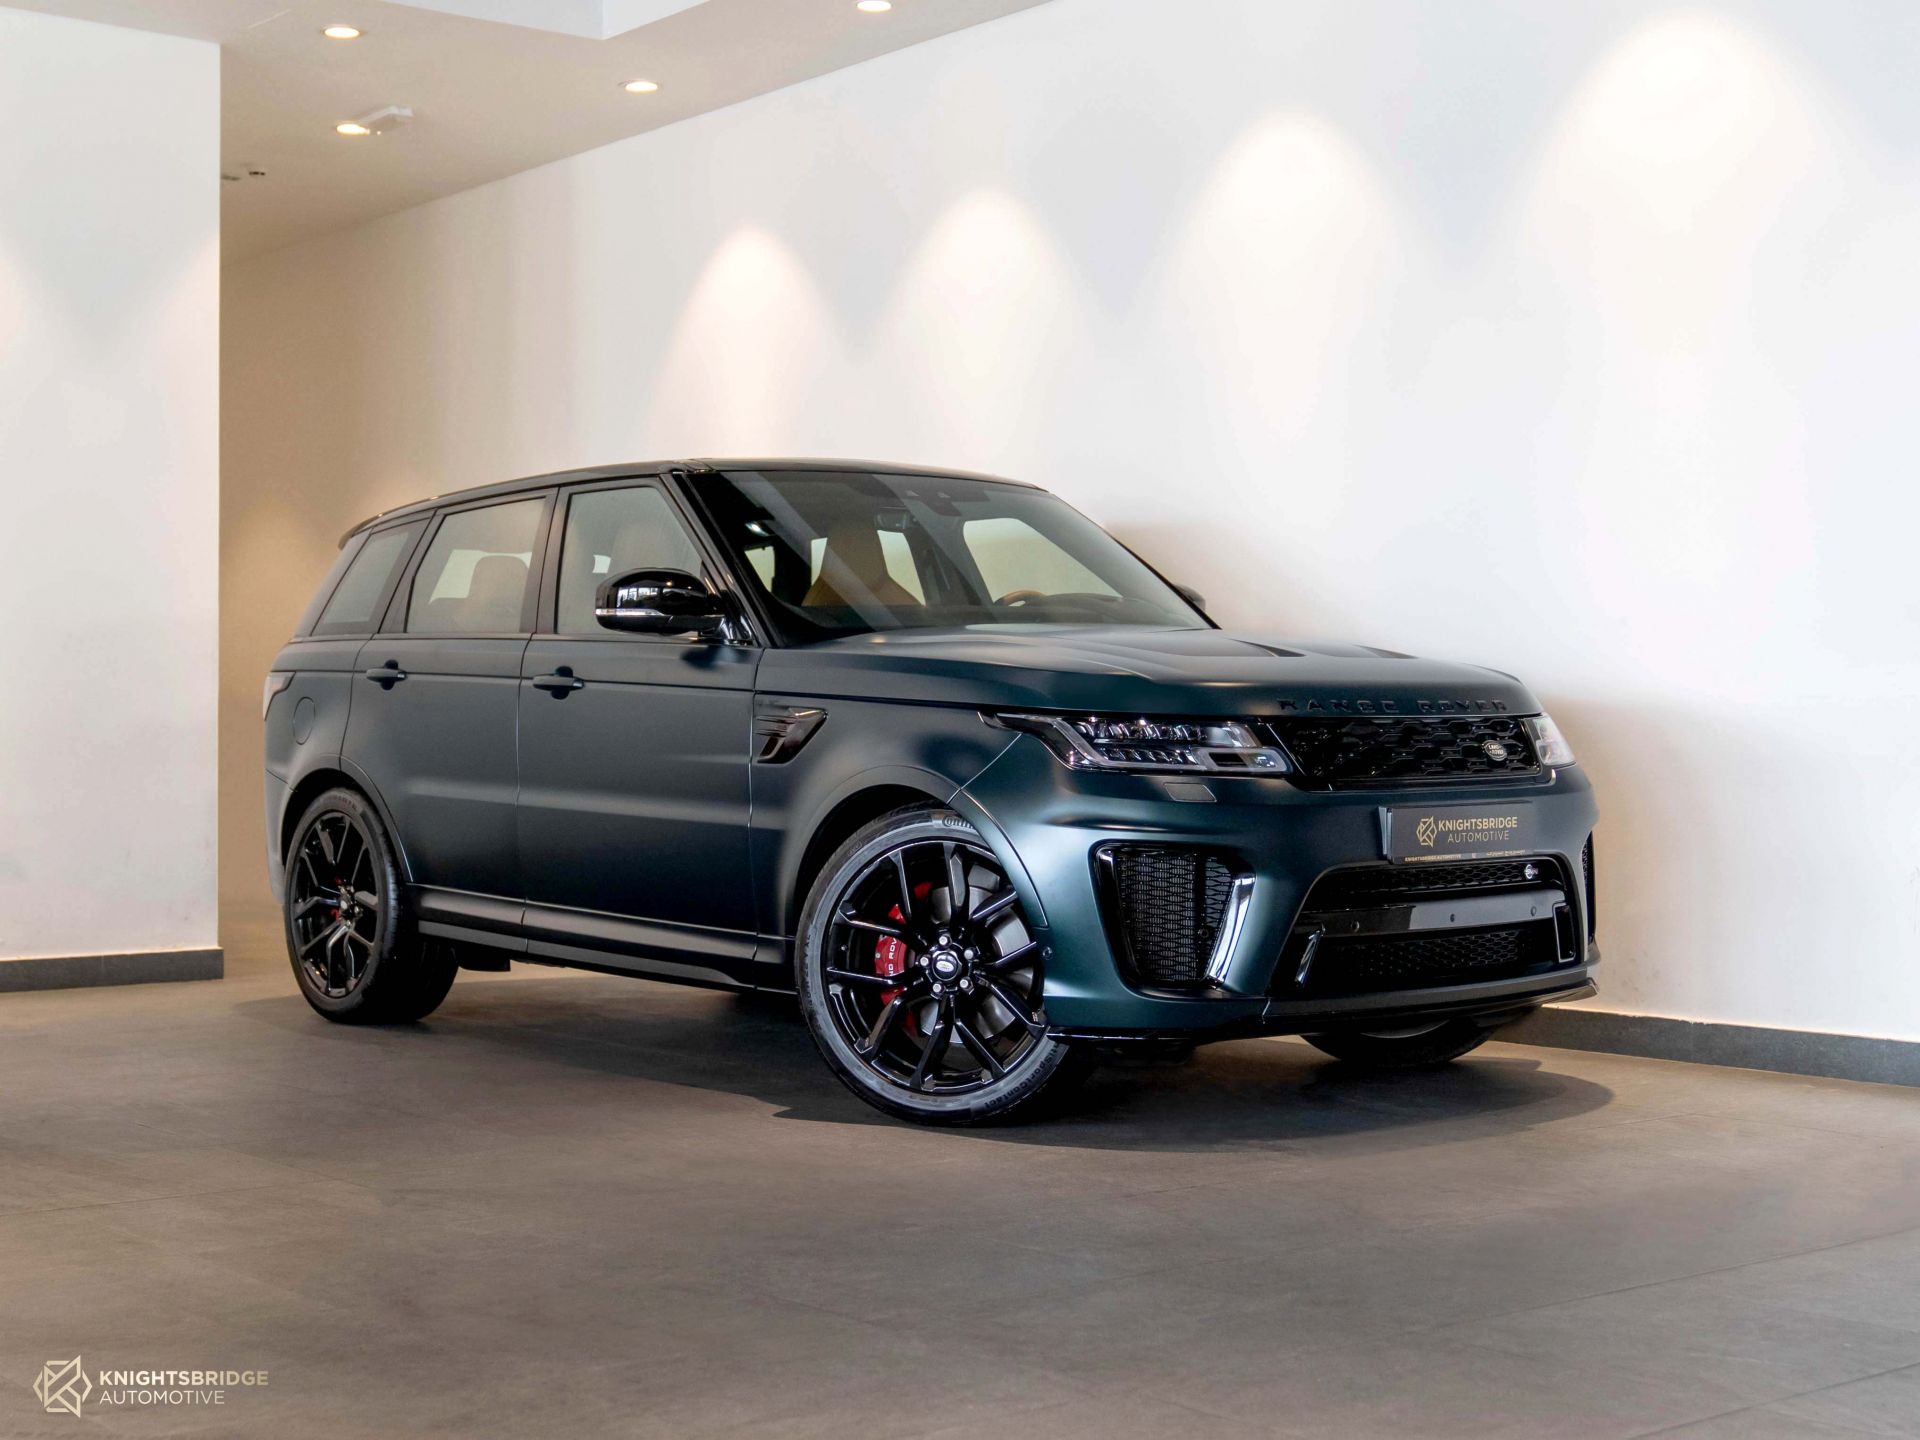 2019 Range Rover Sport SVR at Knightsbridge Automotive - (10250 - 1)